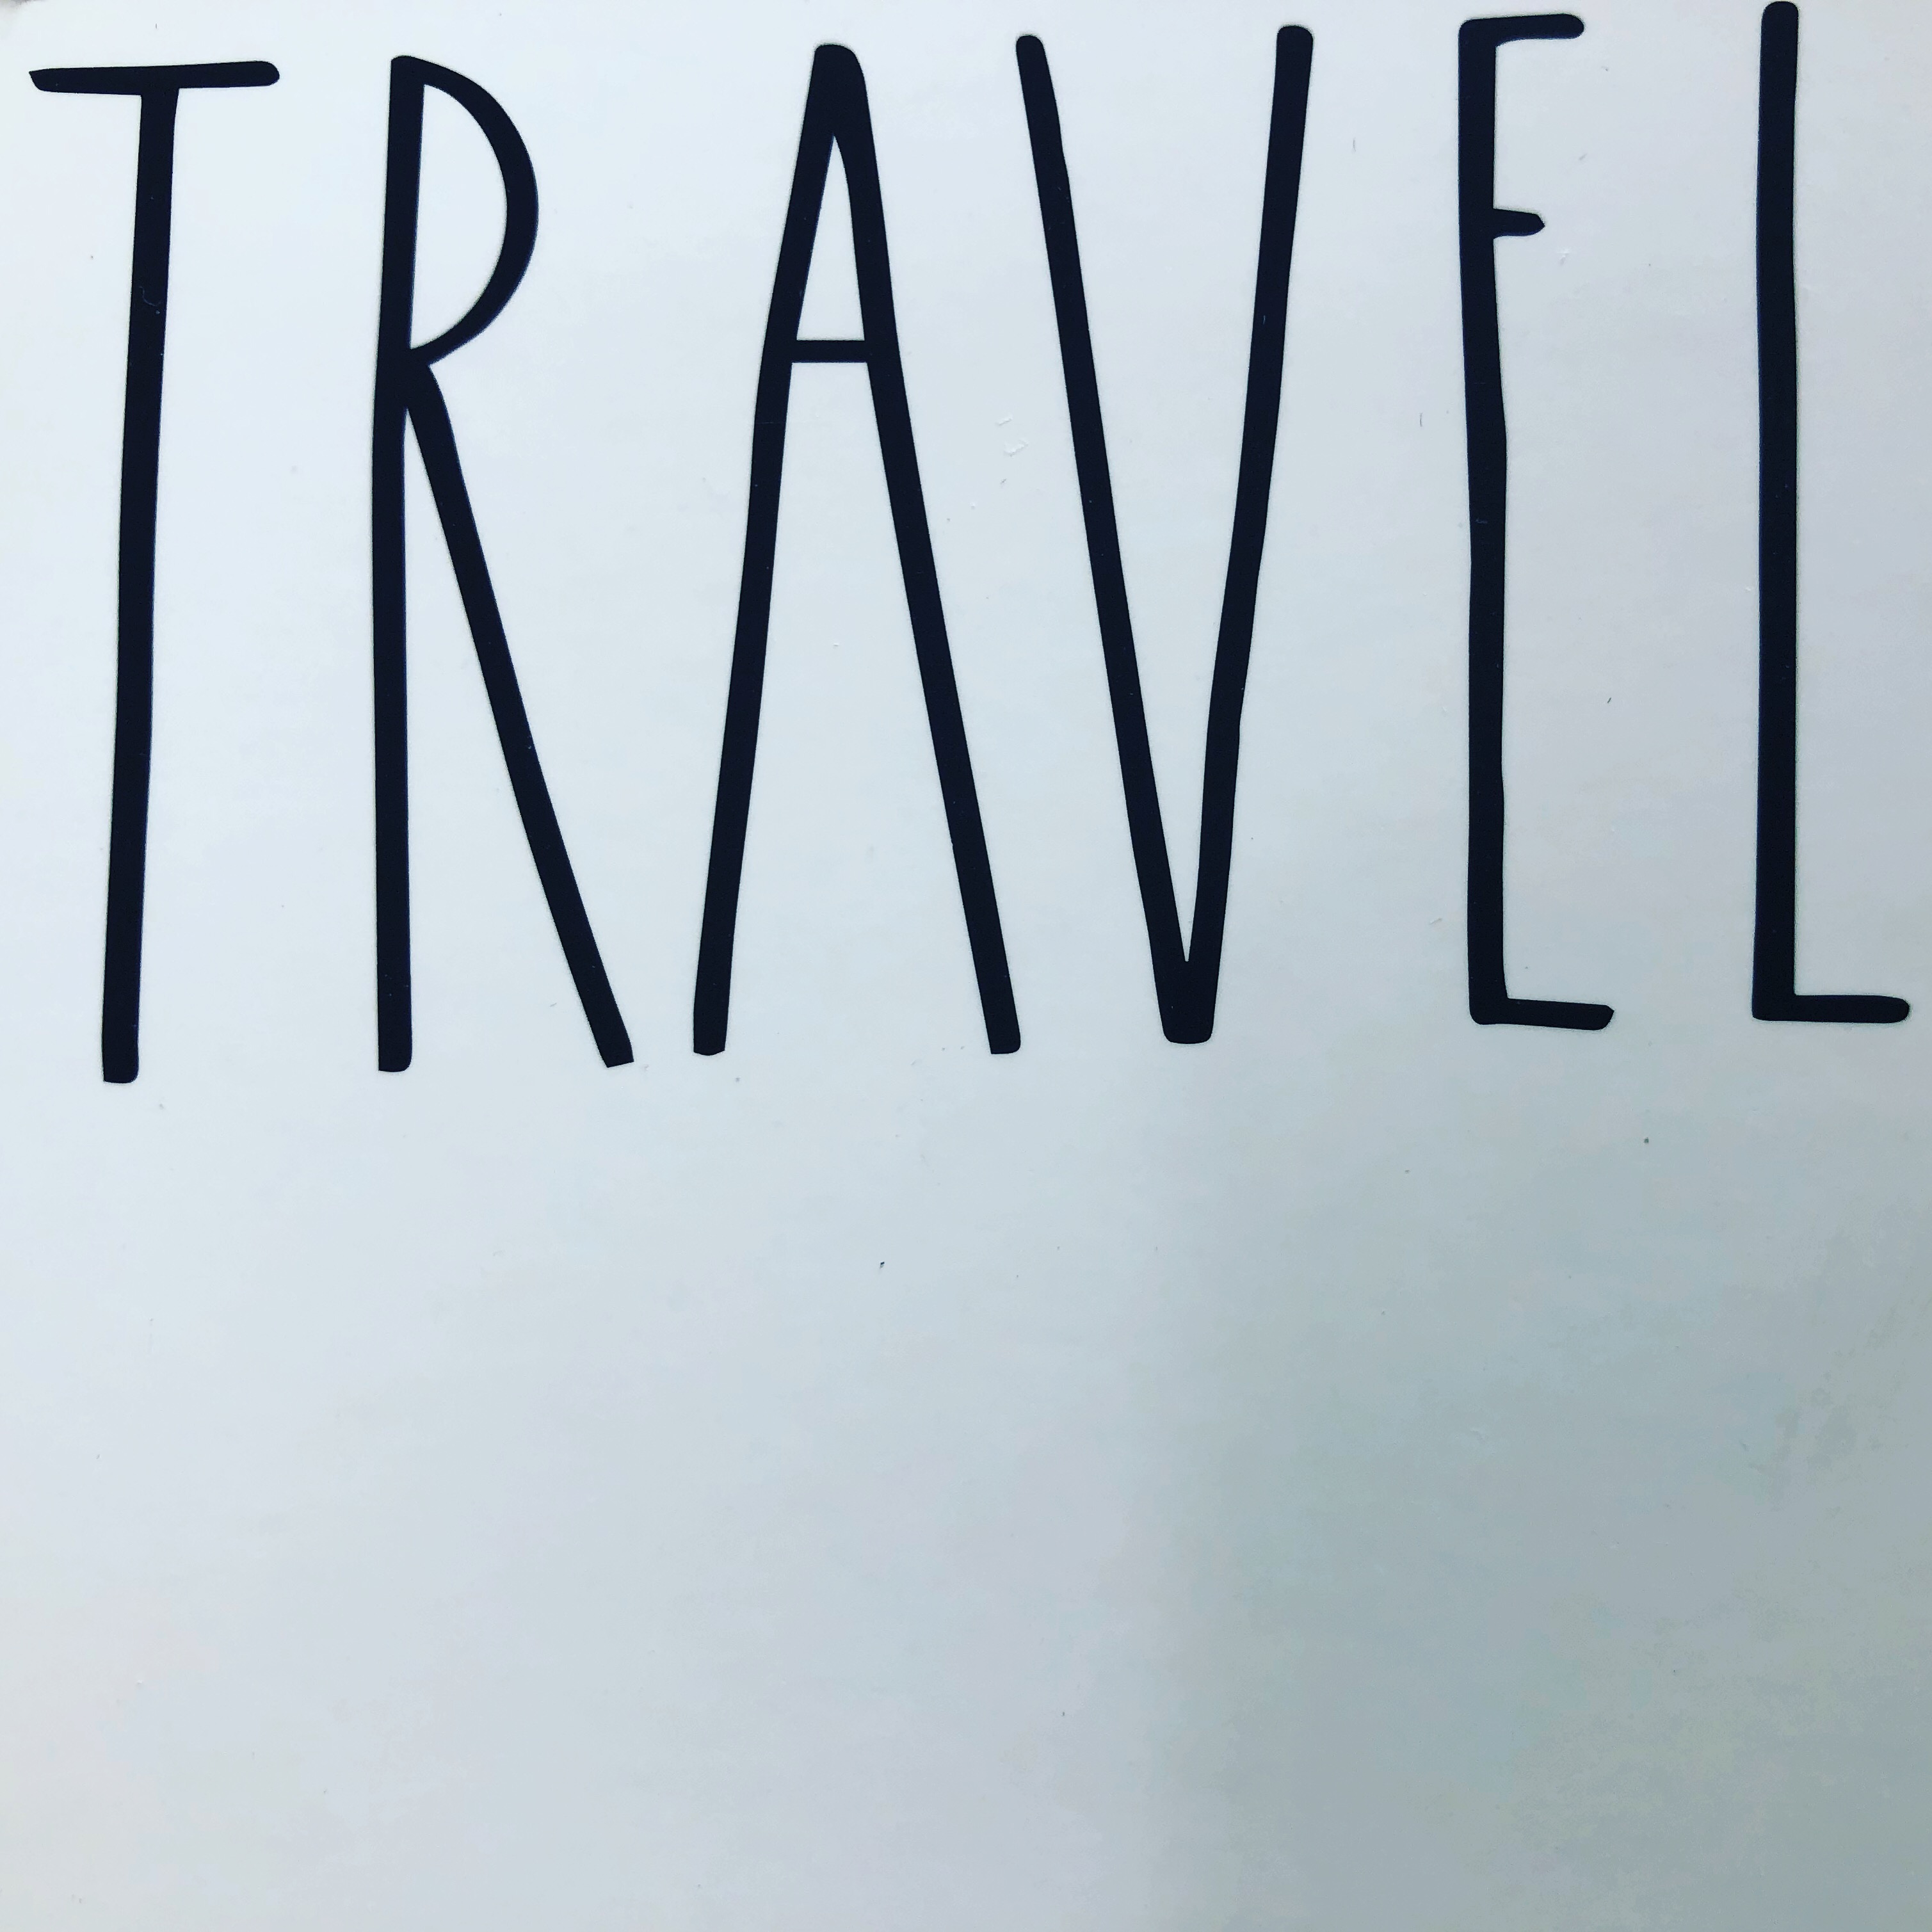 Destination:  I Travel Because  – May 25, 2019